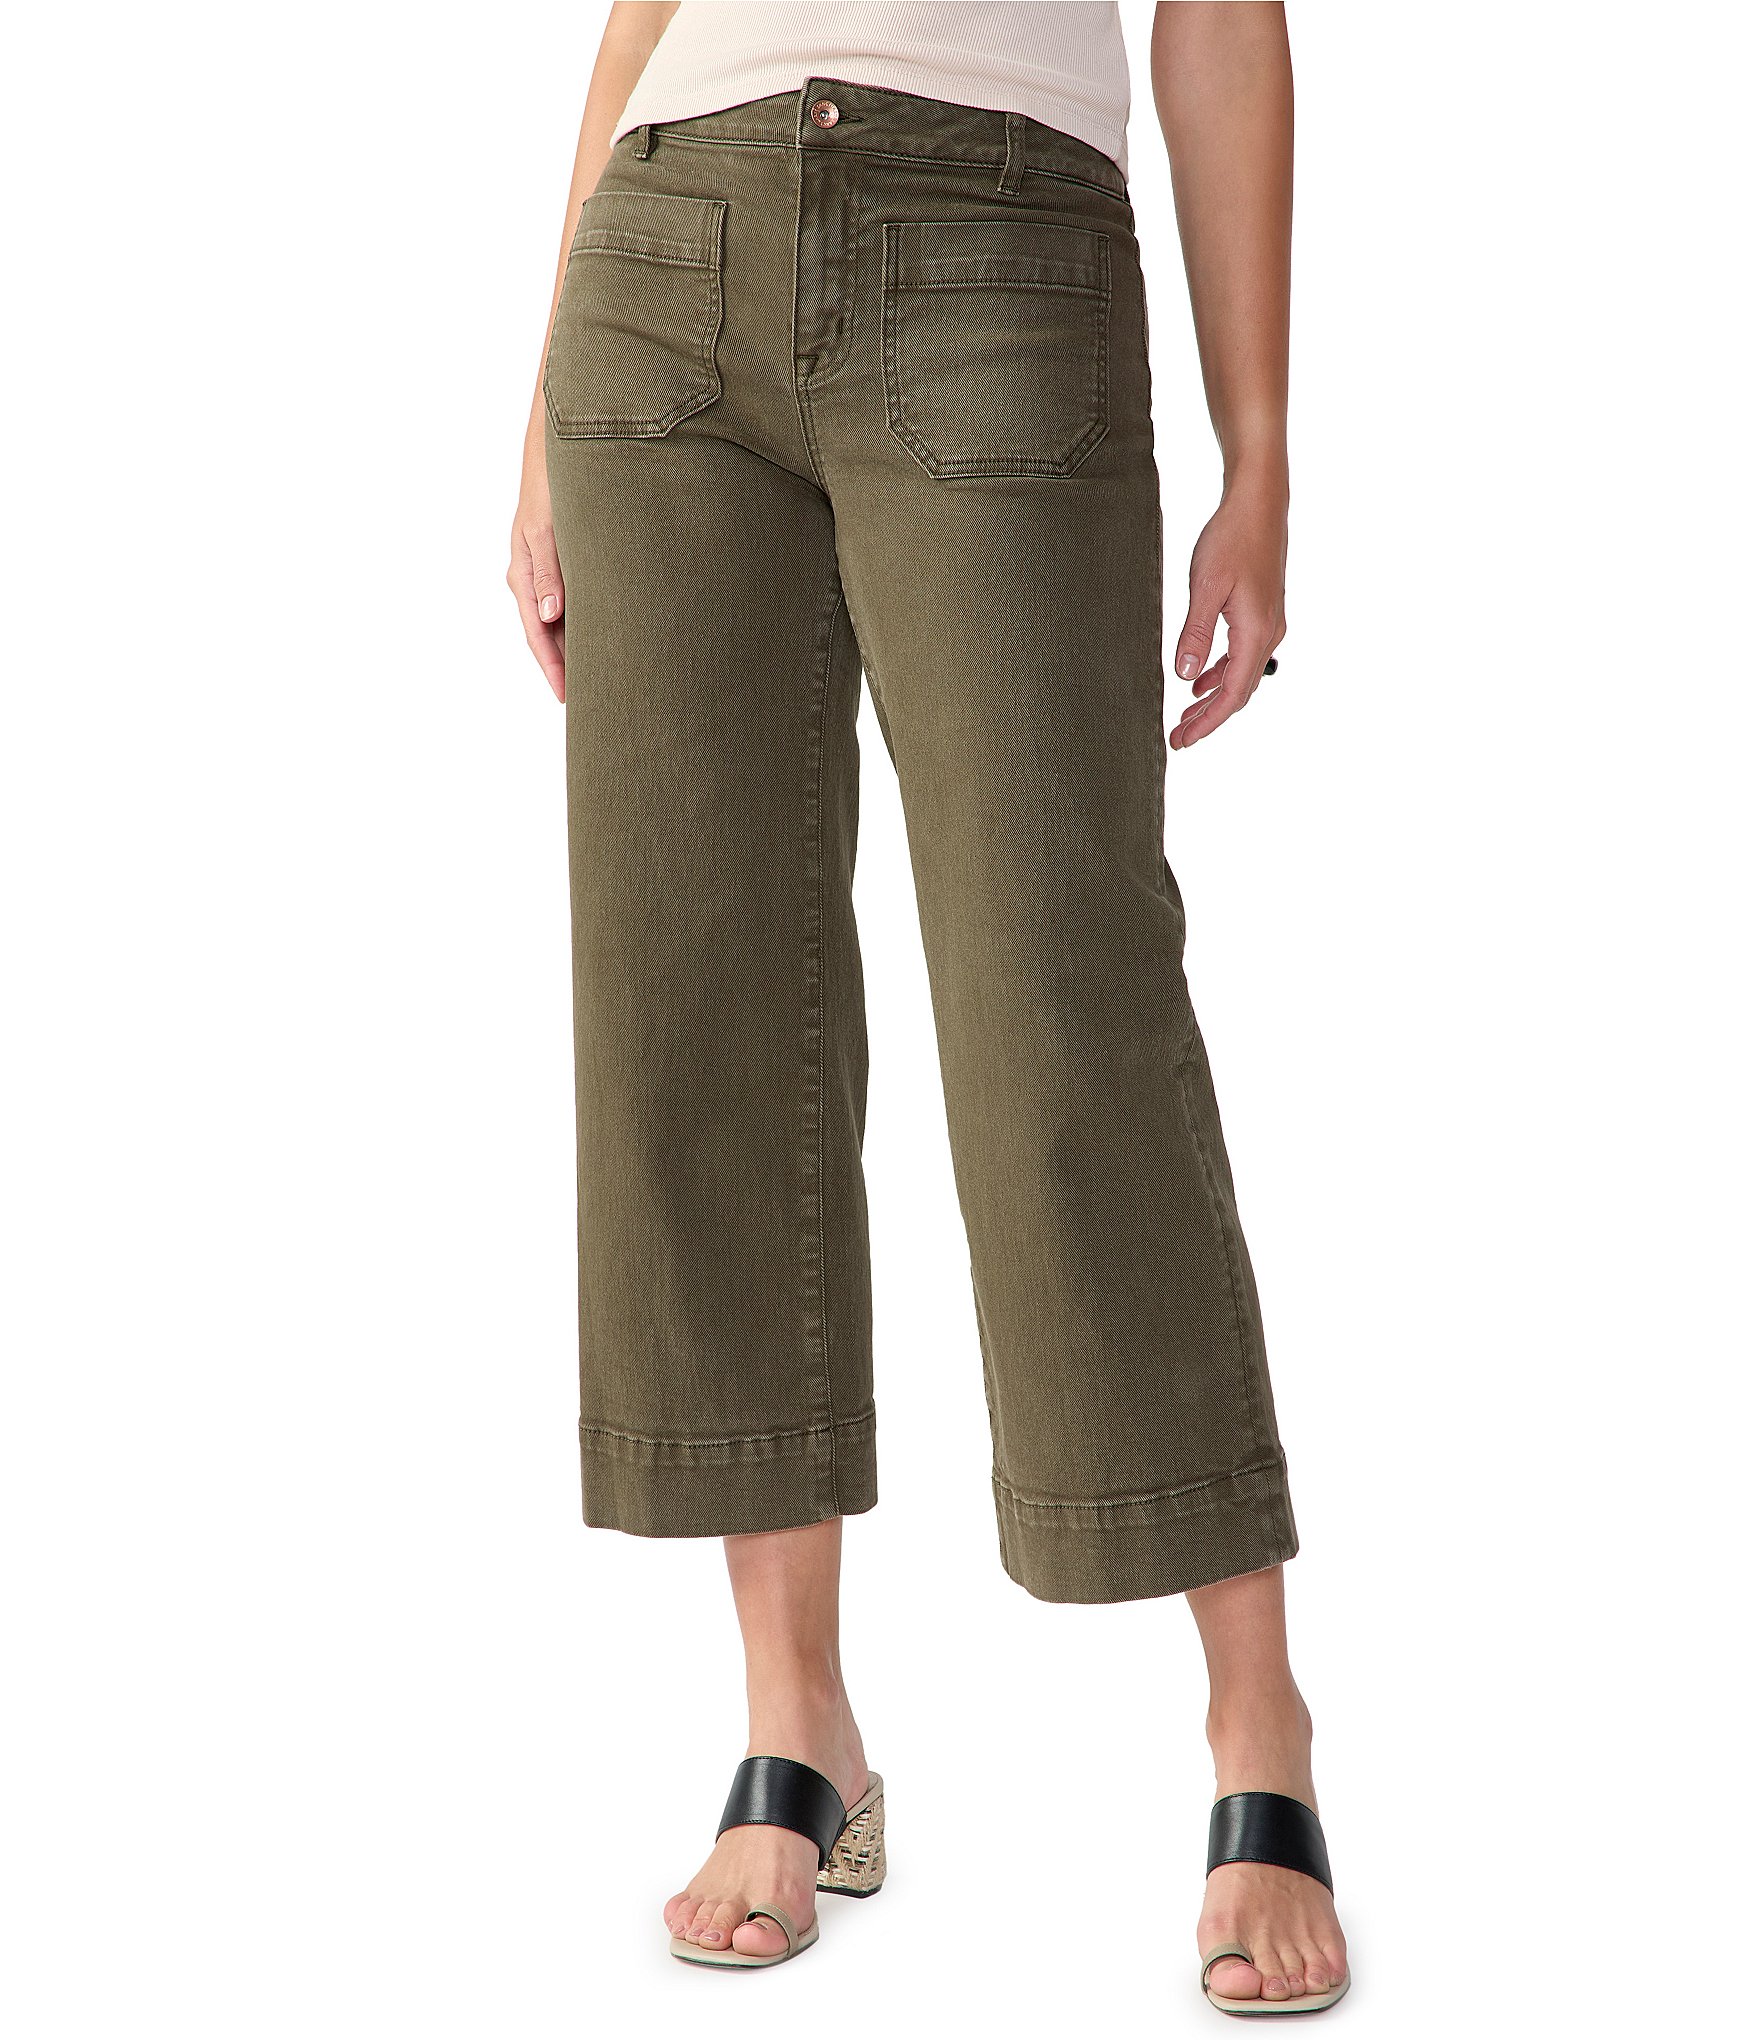 LIODIX Boot-Leg Women Green Jeans - Buy LIODIX Boot-Leg Women Green Jeans  Online at Best Prices in India